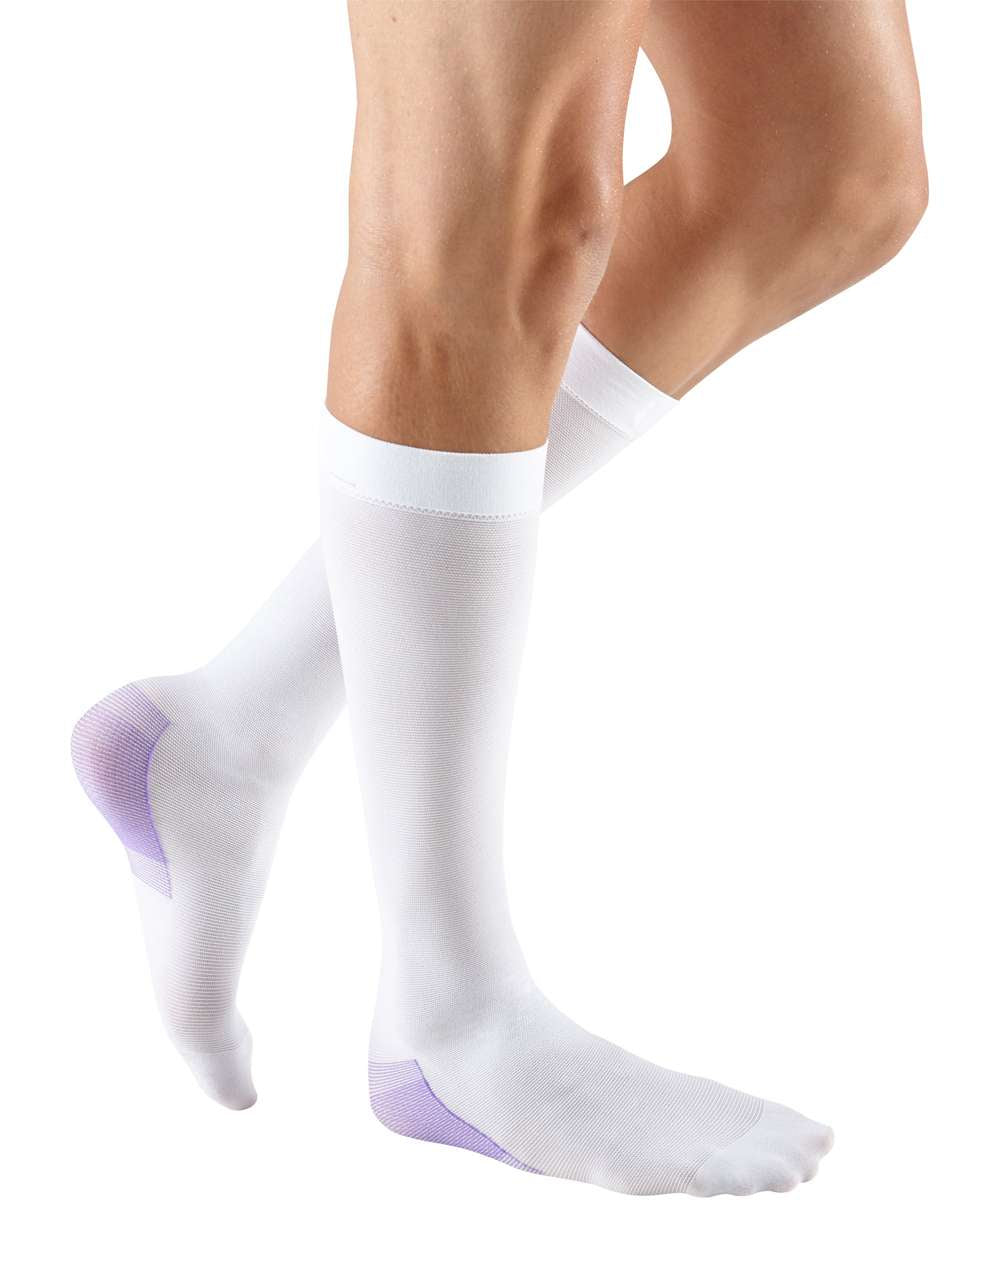 Anti-Embolism Stockings C.A.R.E.™ Knee High Medium, Regular White